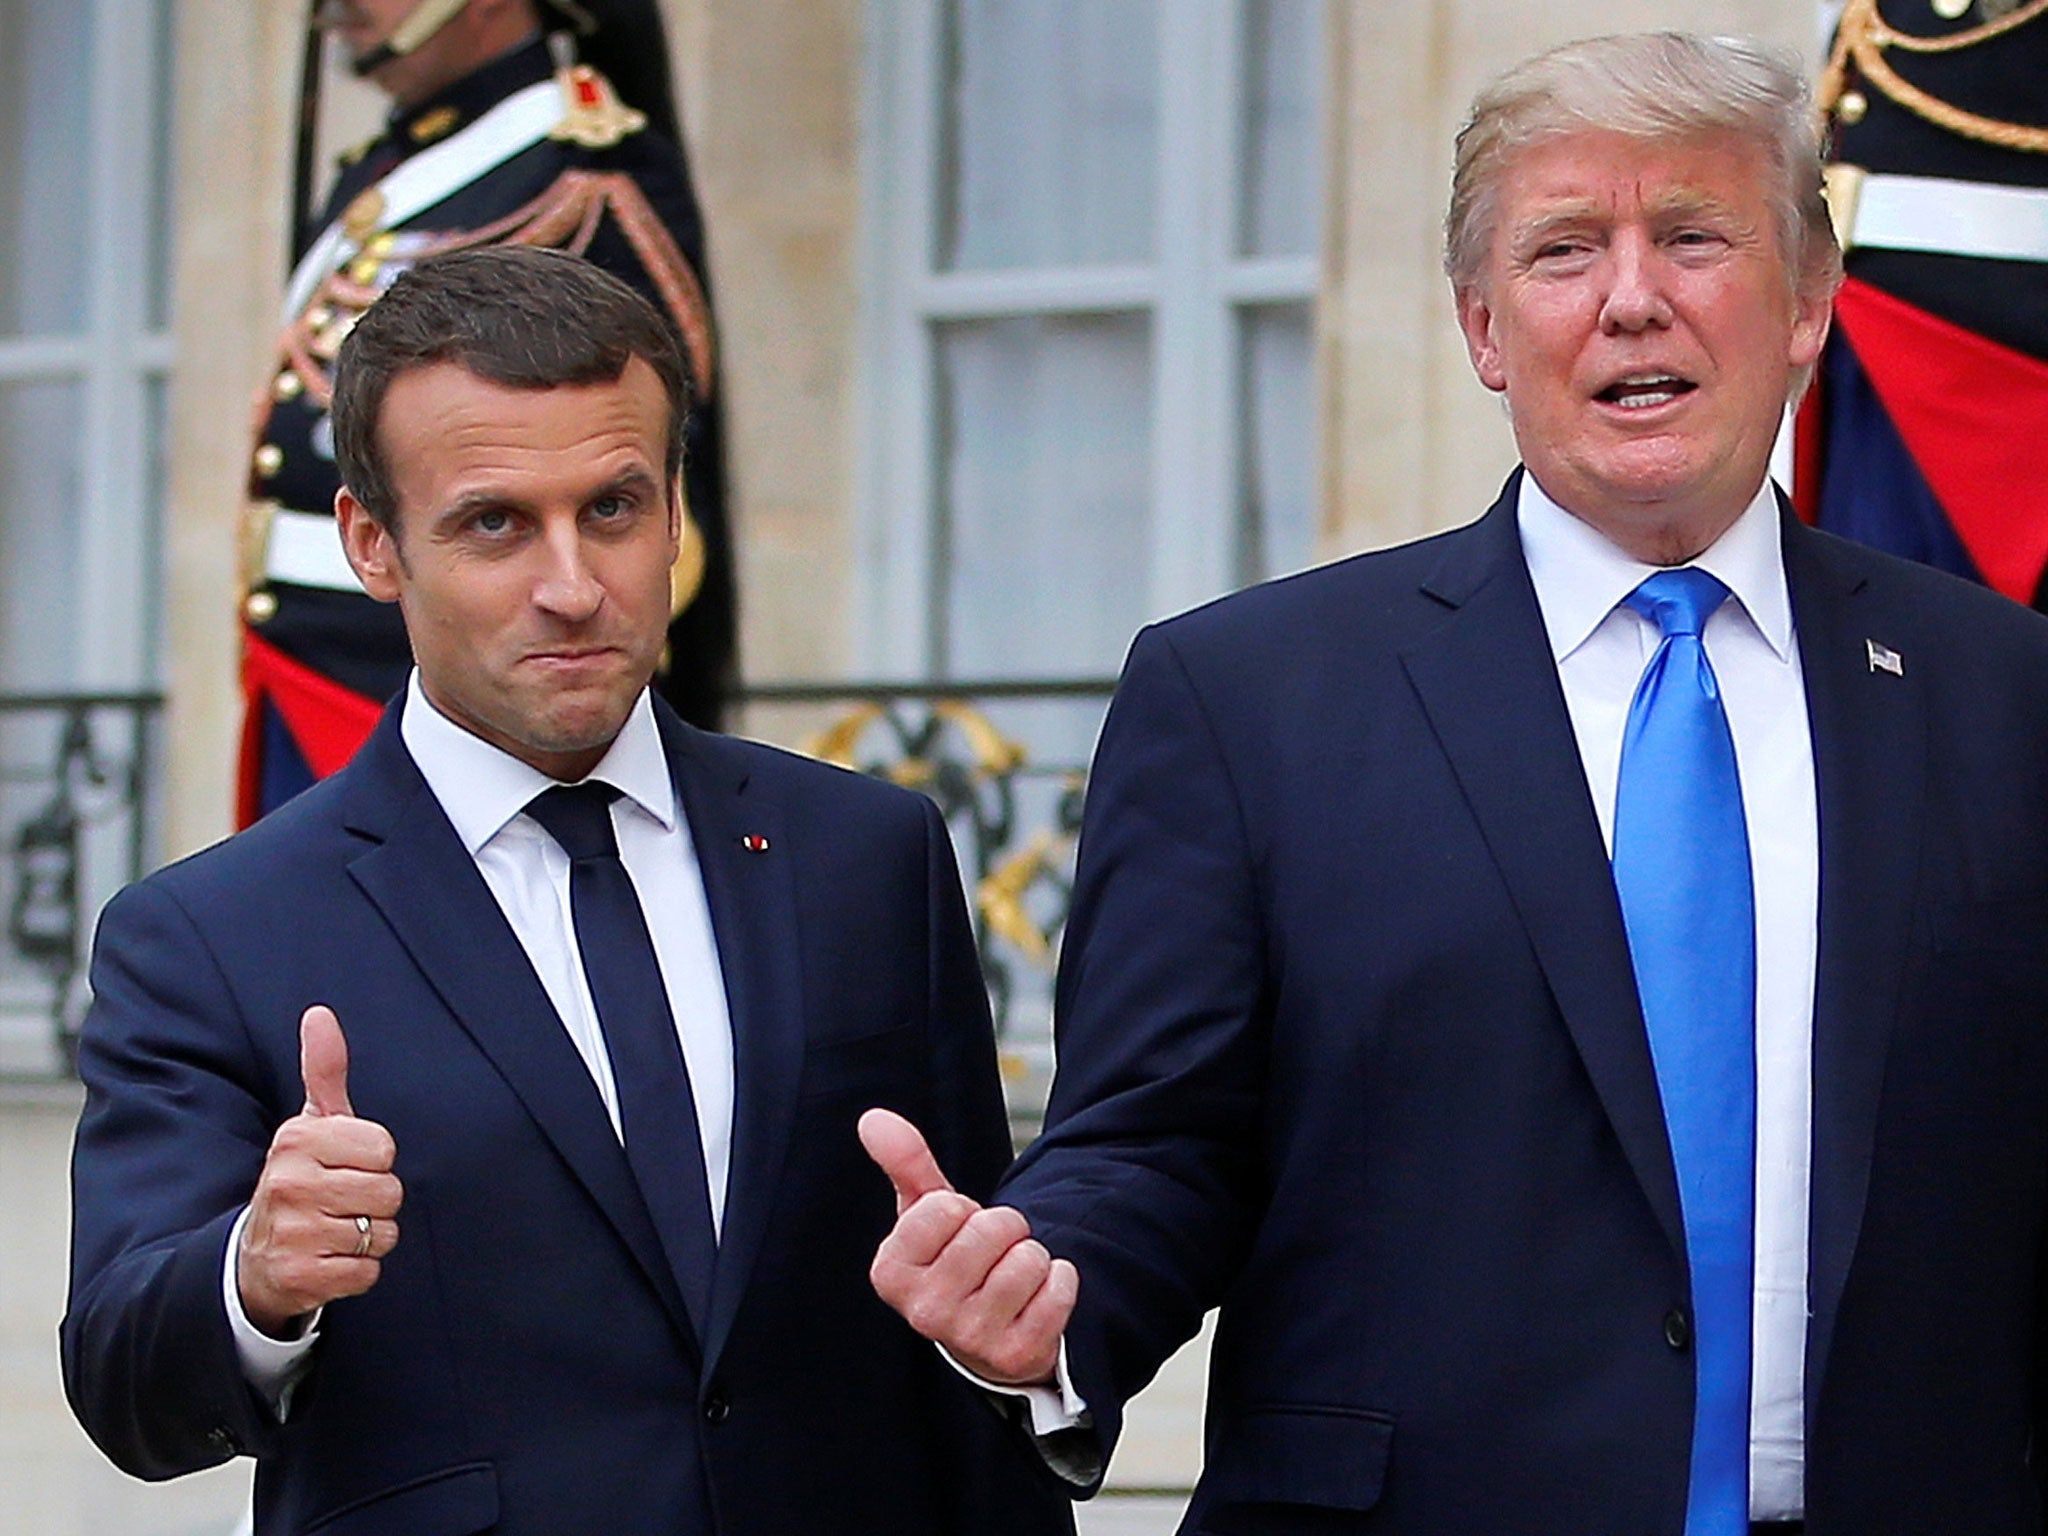 Emmanuel Macron thinks he has convinced Trump to rejoin Paris Agreement on climate change